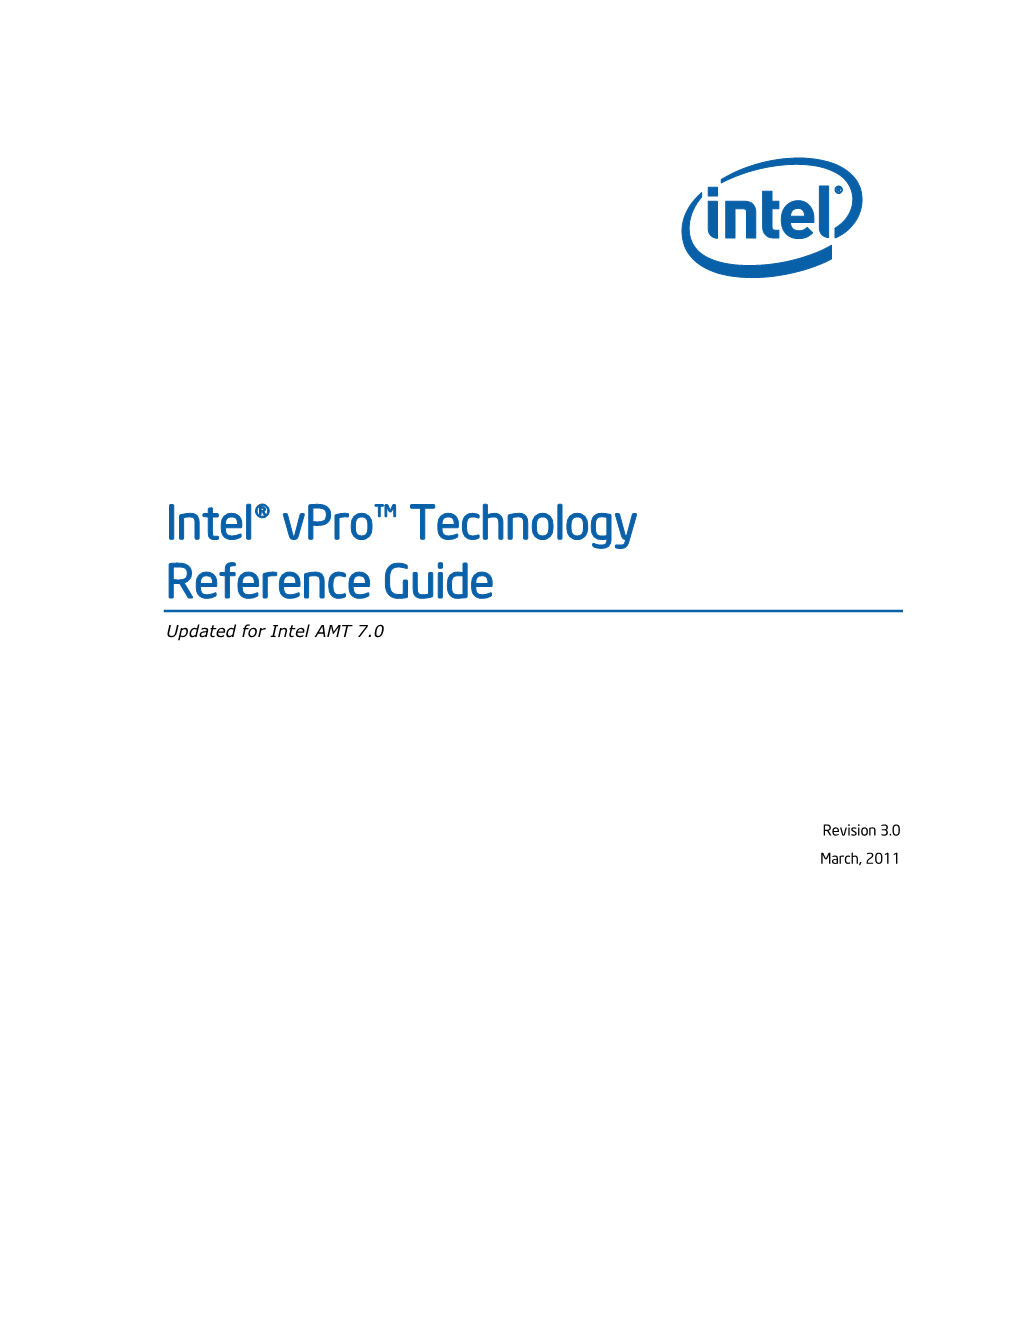 Intel® Vpro™ Technology Reference Guide